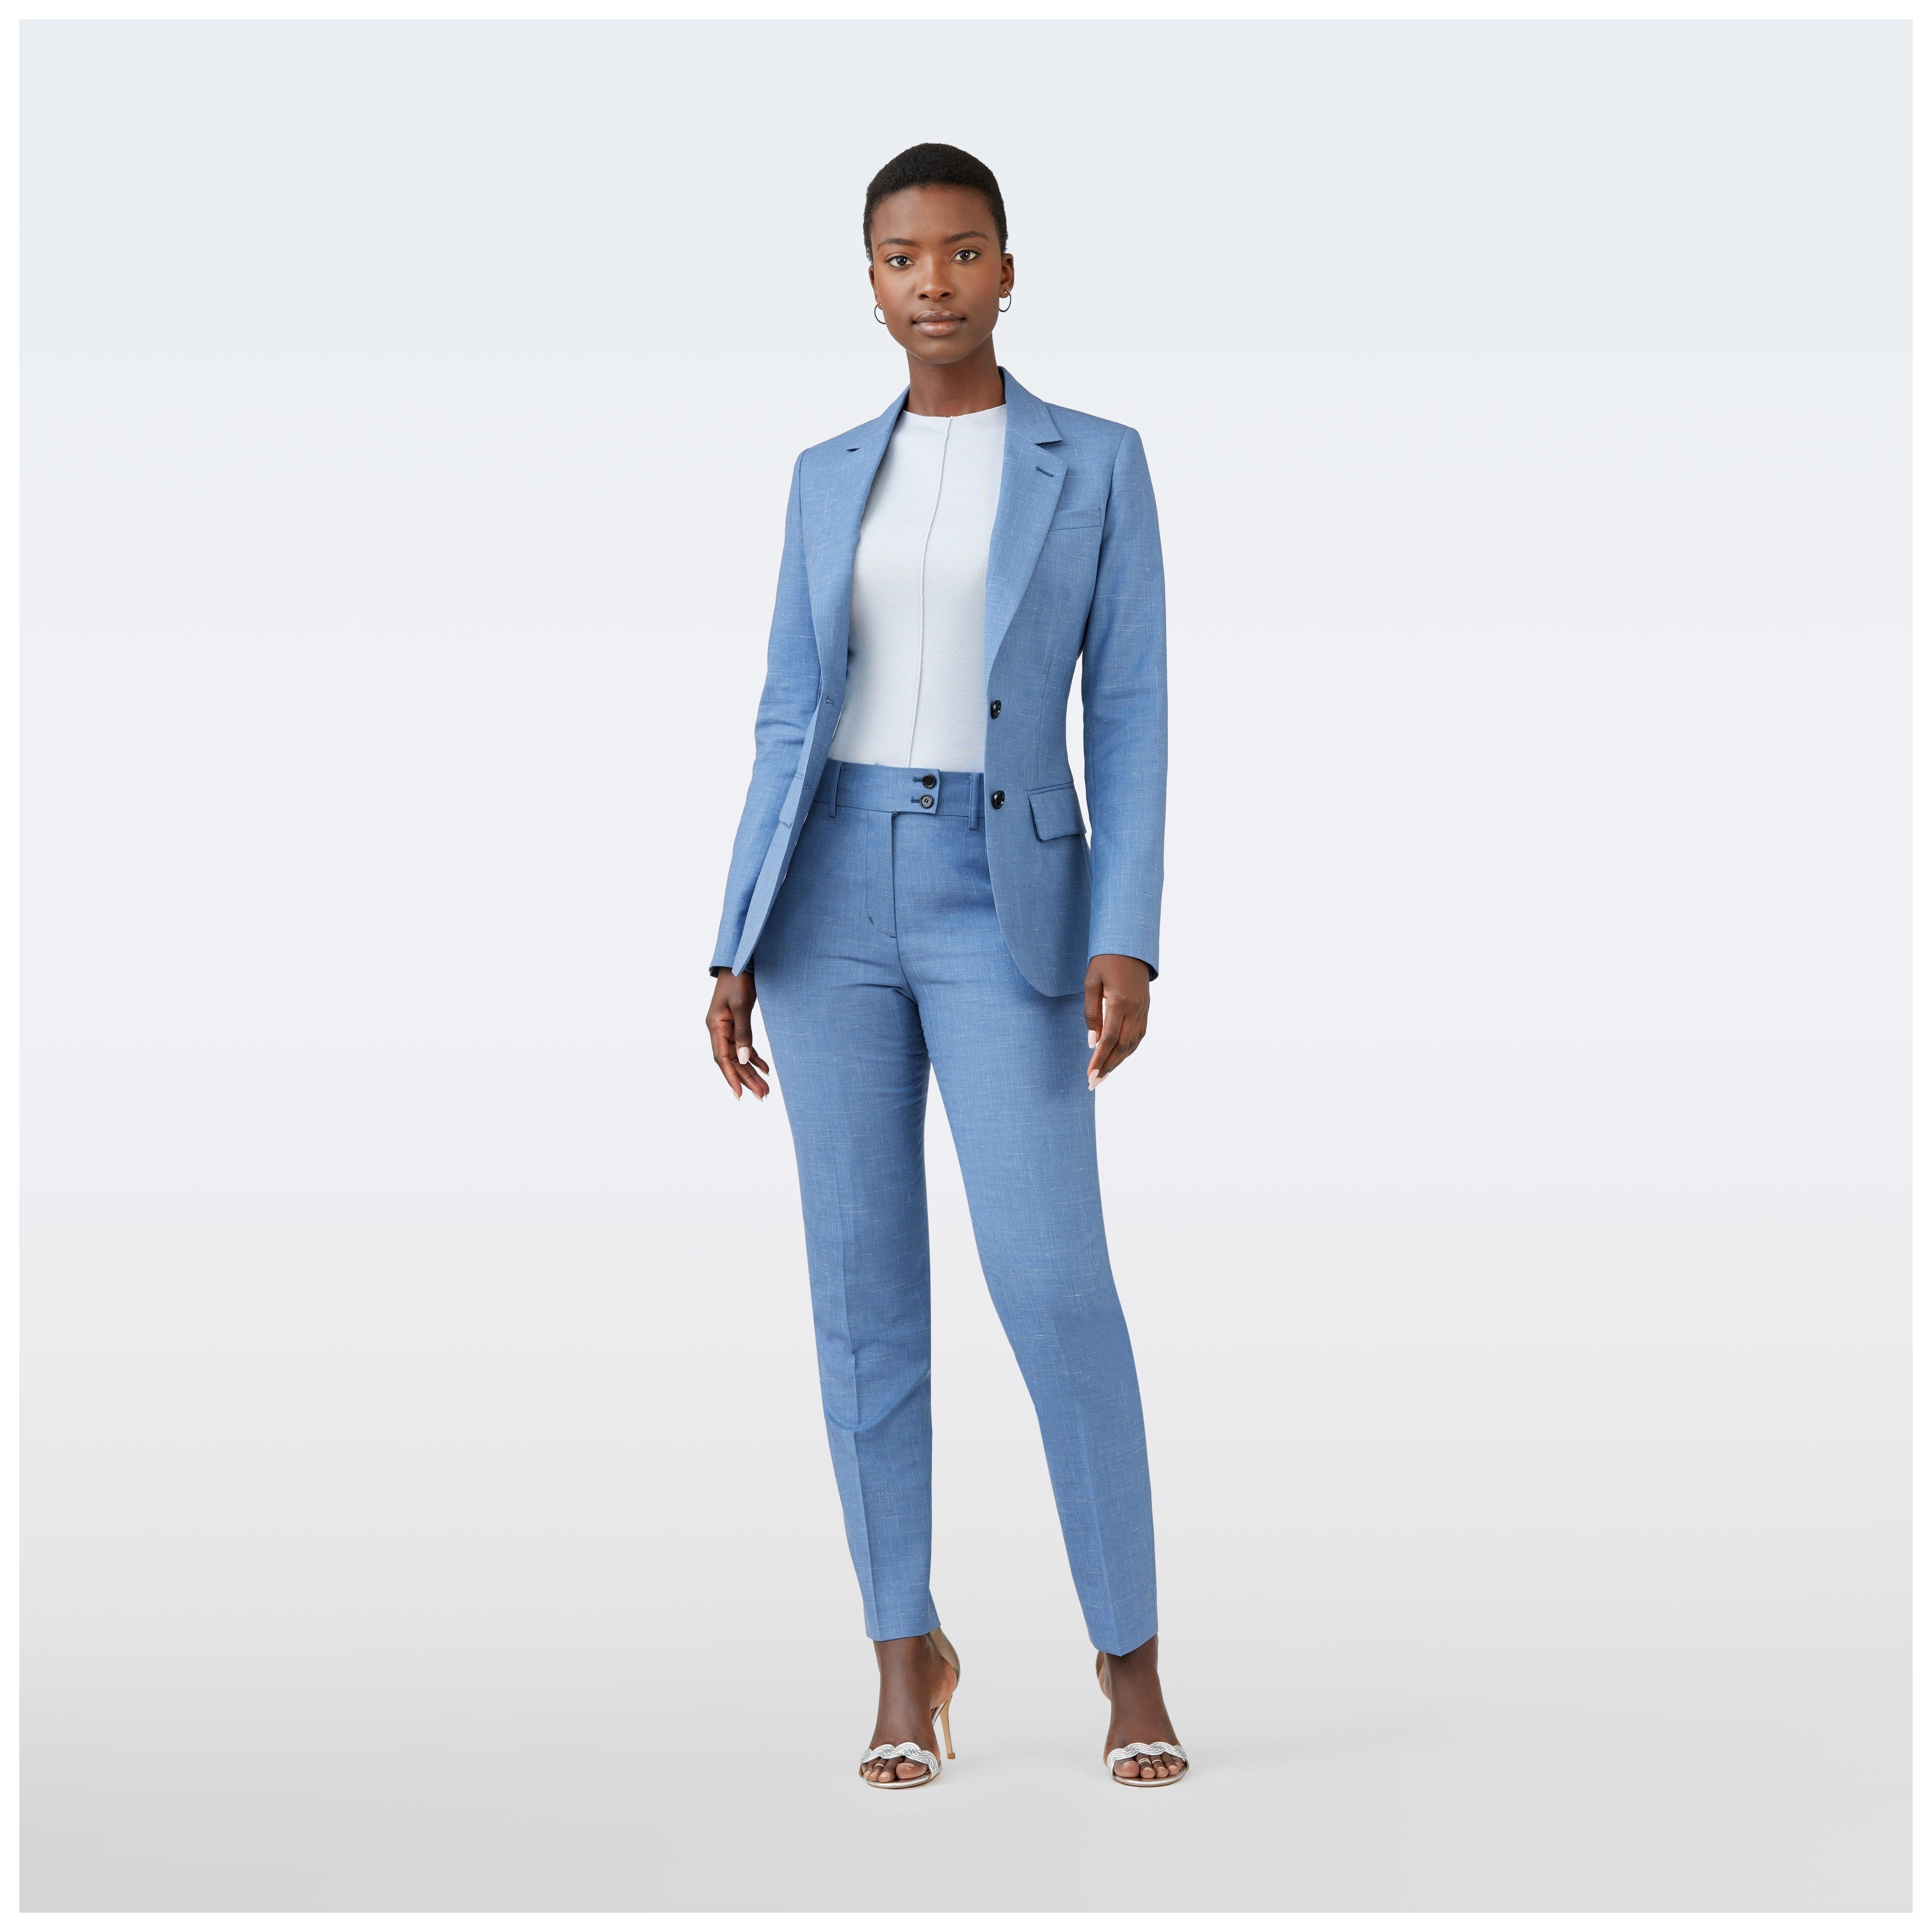 Sky Blue Women Suits For Wedding 2 Pieces Irregular Hem Blazer With Belt  Straight Pants Designer Party Prom Dress Custom Made - AliExpress